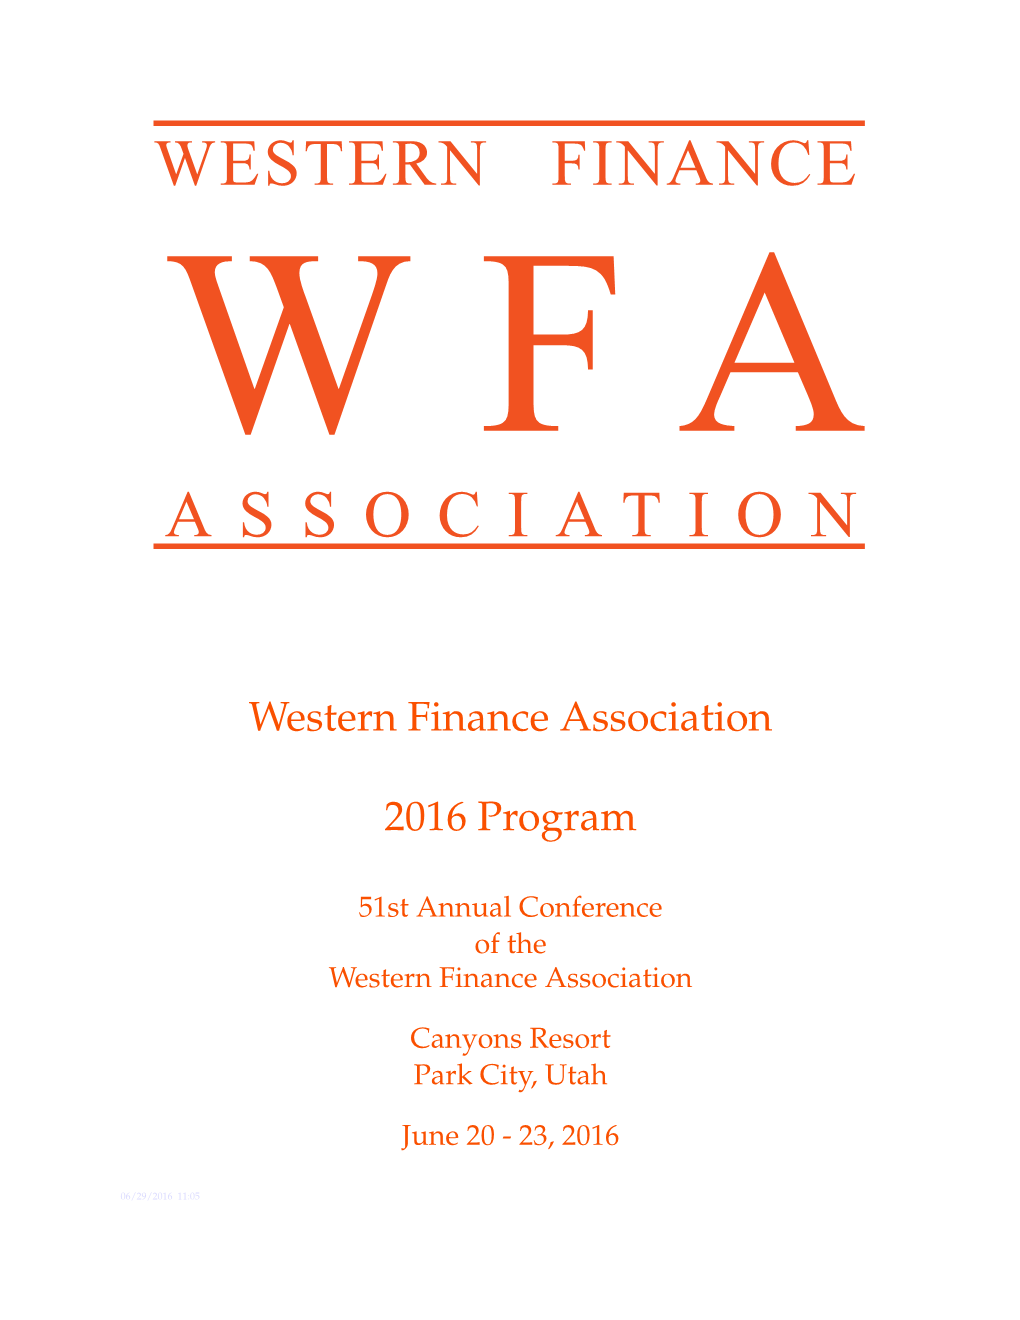 Western Finance Association 2016 Program